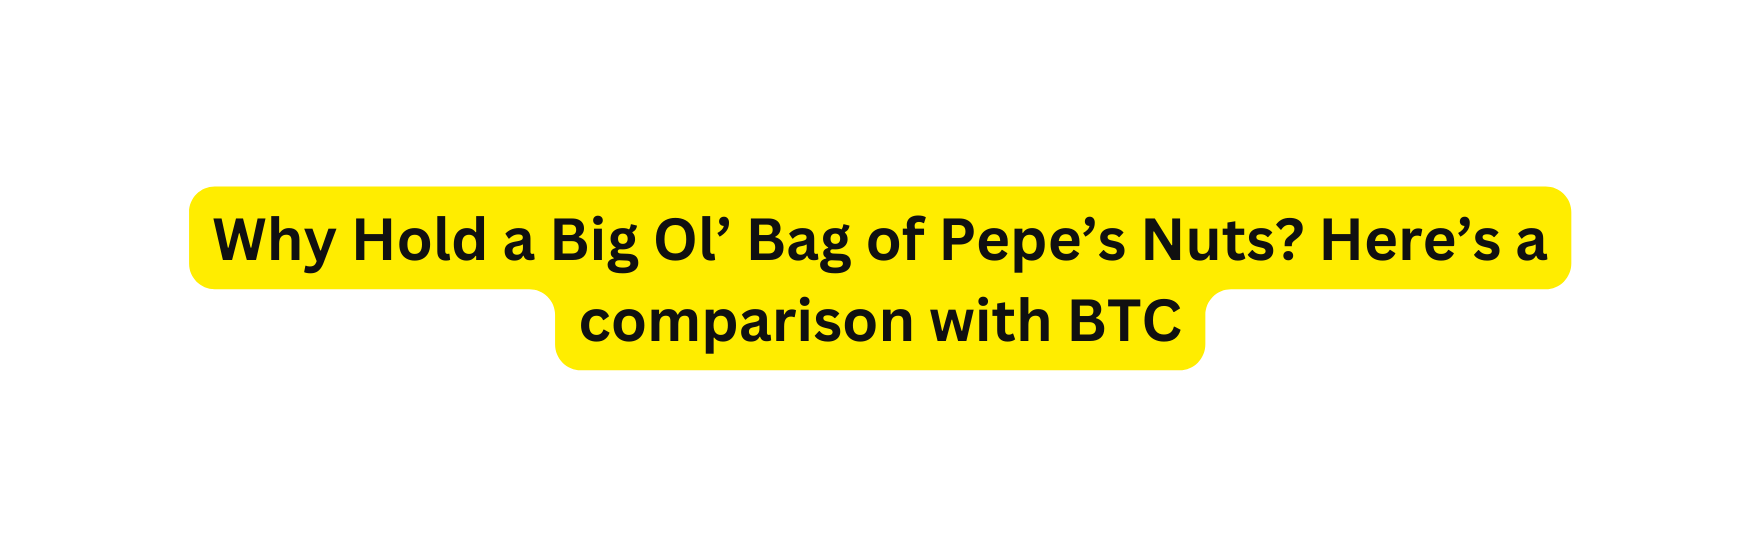 Why Hold a Big Ol Bag of Pepe s Nuts Here s a comparison with BTC